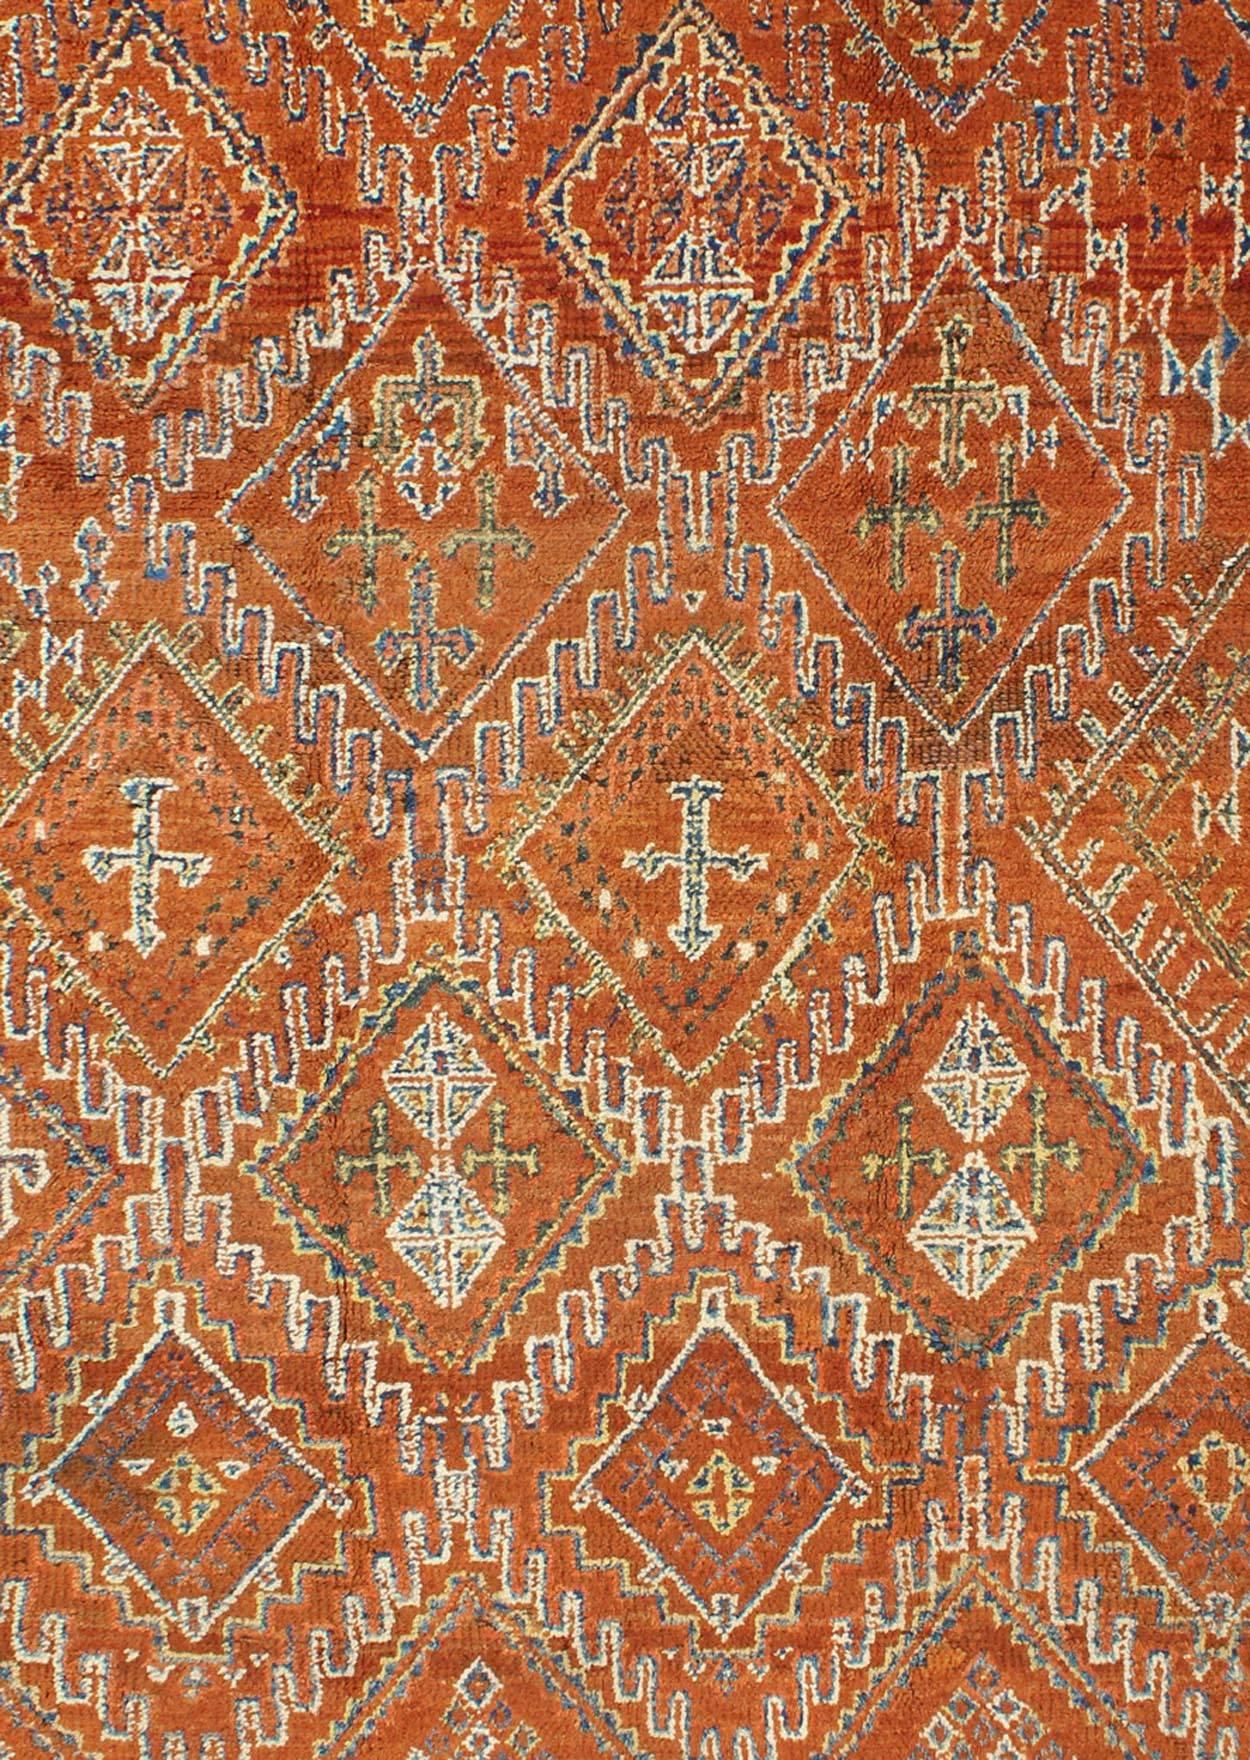 antique moroccan rugs